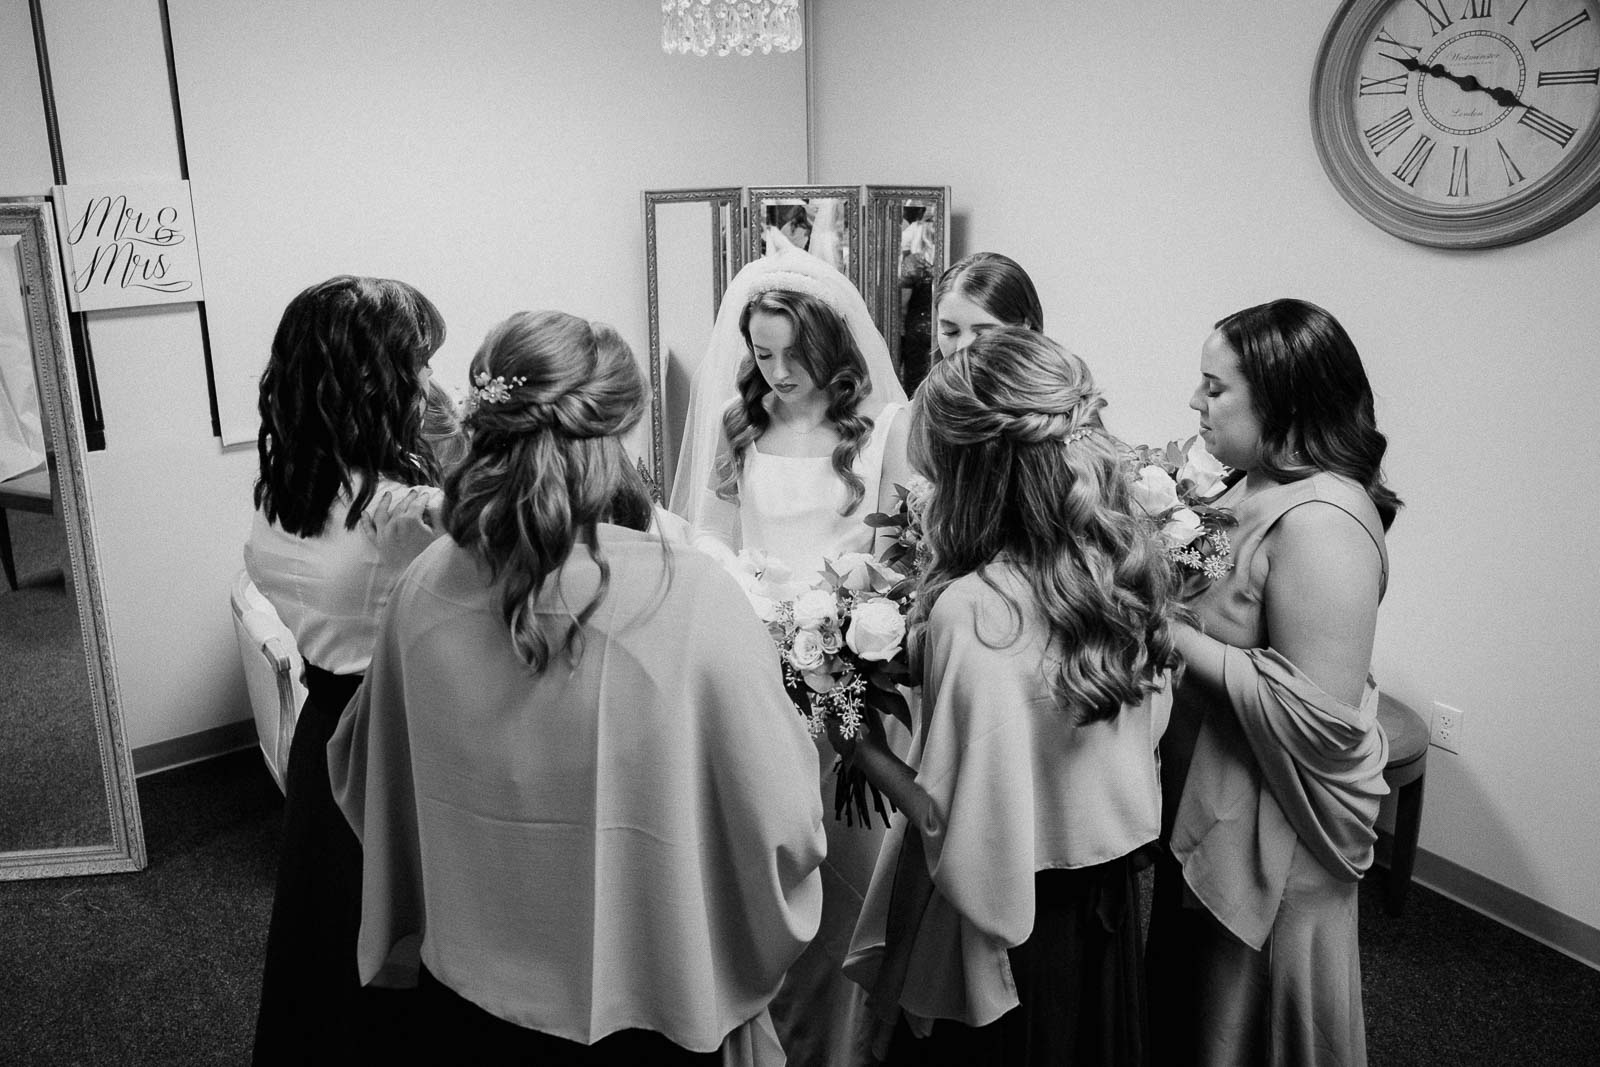 Pre wedding ceremony shows bridesmaids and bride praying